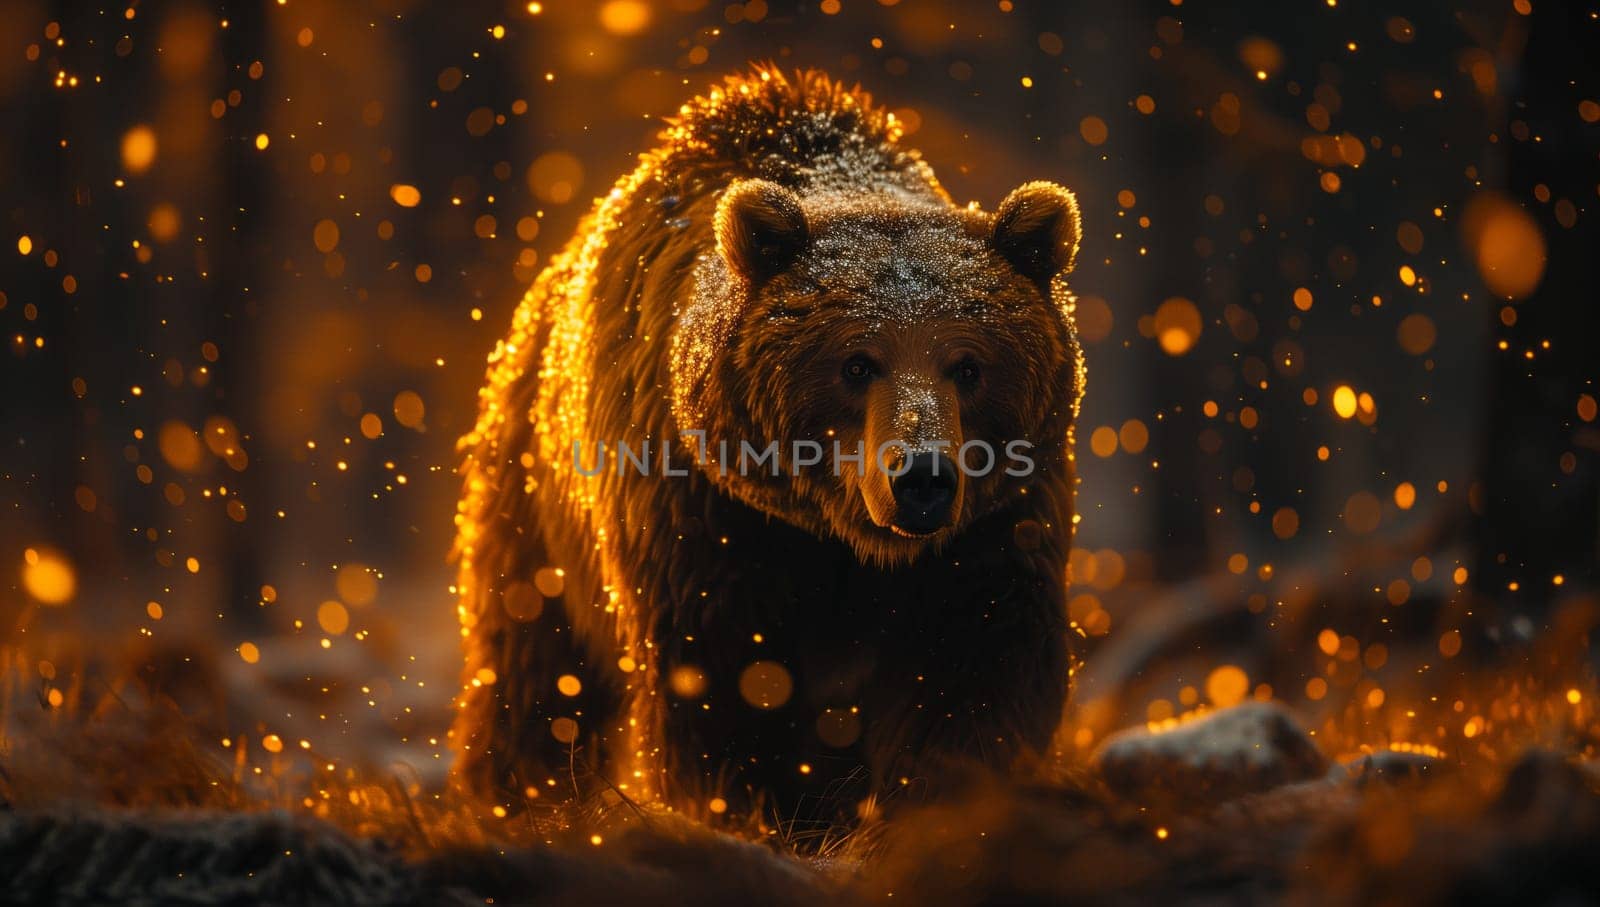 Brown bear, a terrestrial carnivore, wanders through dark woods at night by richwolf